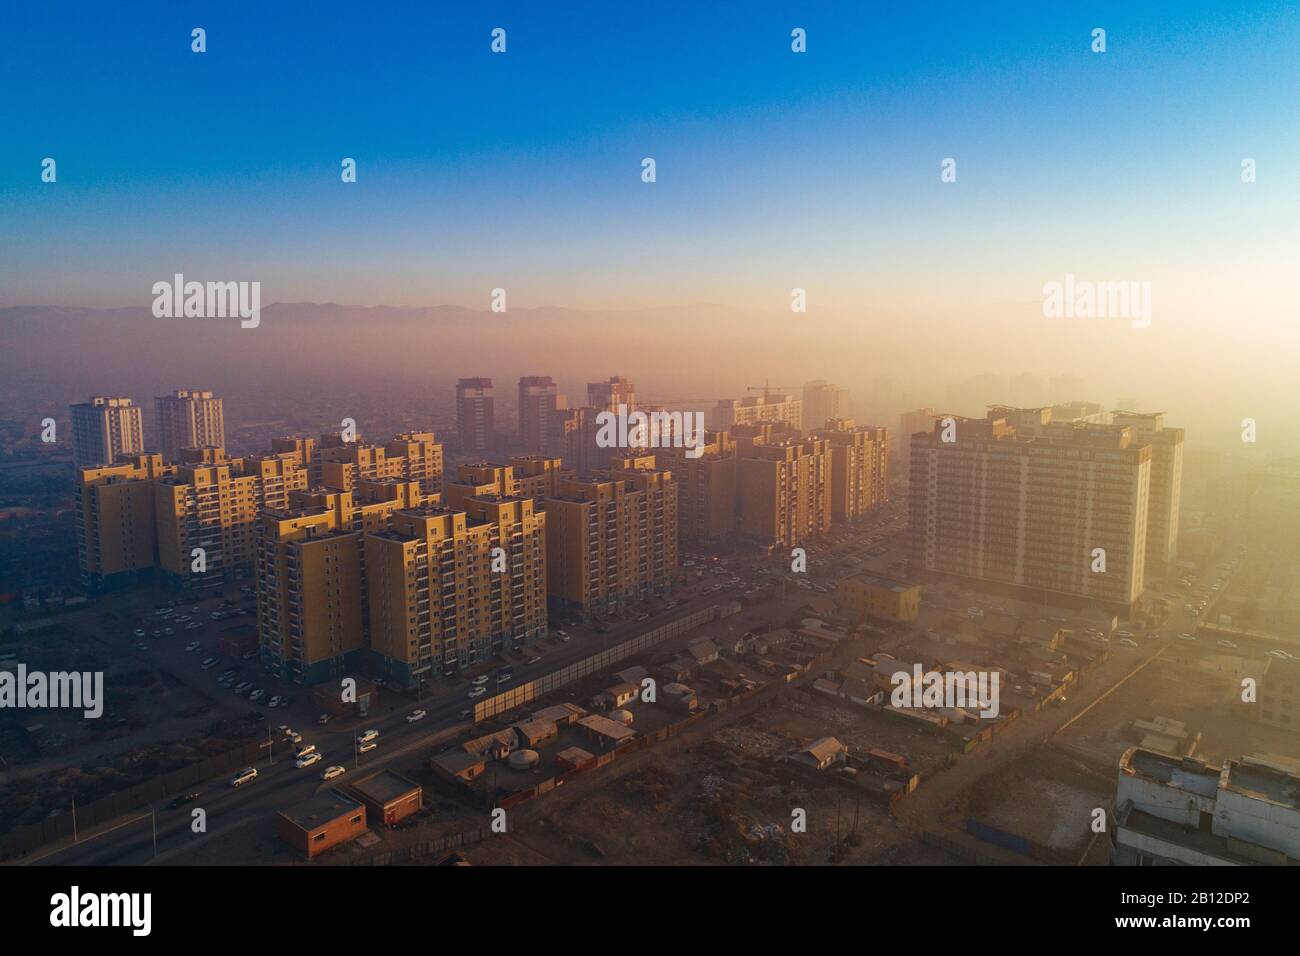 Ulaanbaatar at sunrise with smog, Mongolia Stock Photo